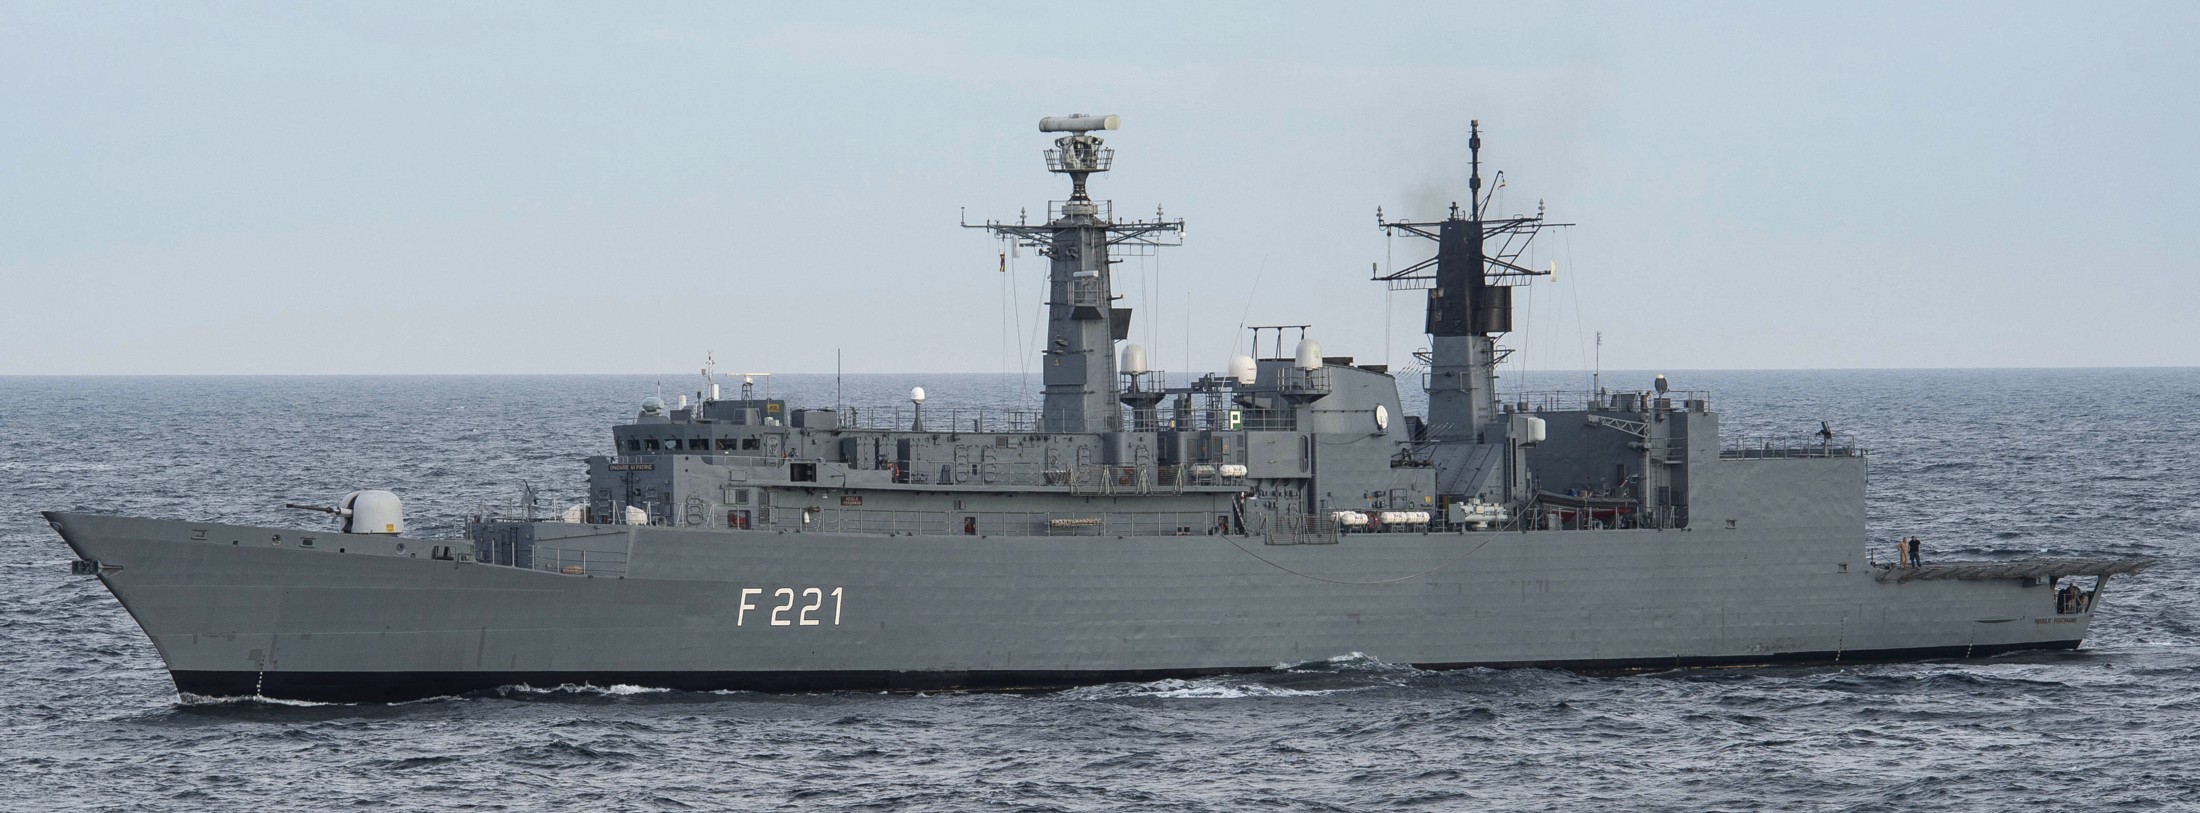 f 221 regele ferdinand romanian navy type 22 broadsword class frigate ex hms coventry f 98